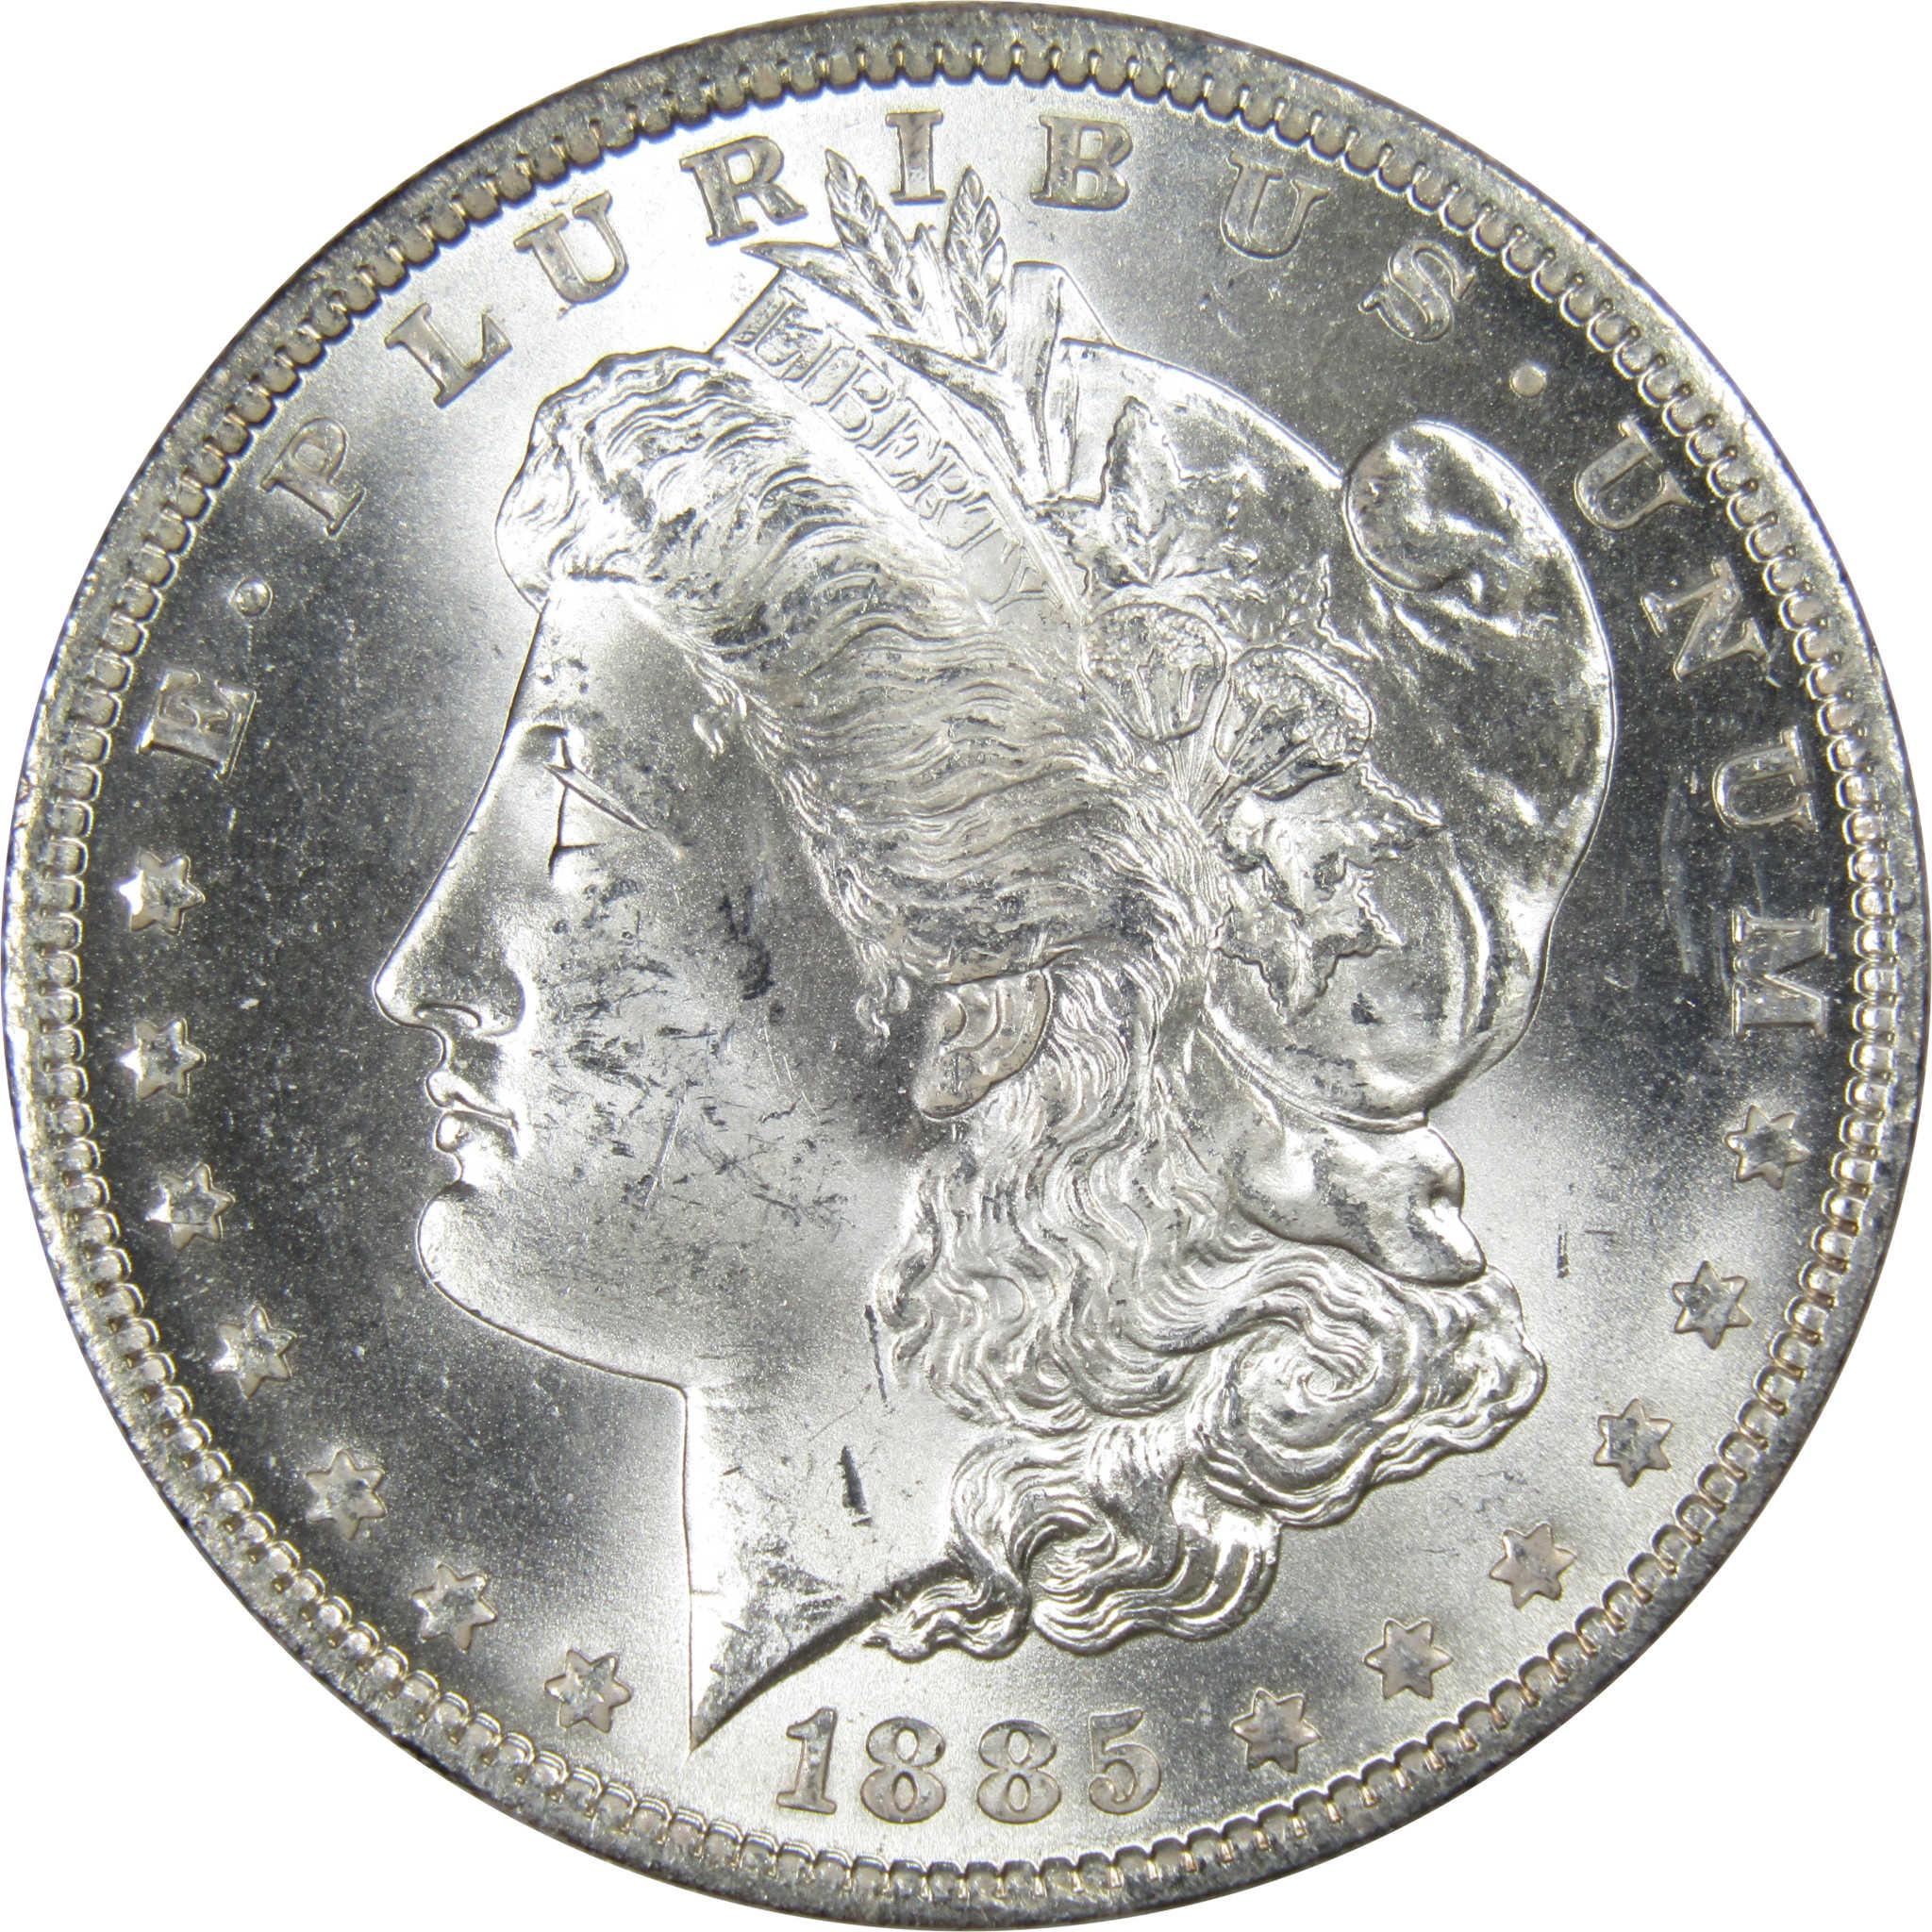 1885 O Morgan Dollar BU Choice Uncirculated Mint State 90% Silver $1 US Coin - Morgan coin - Morgan silver dollar - Morgan silver dollar for sale - Profile Coins &amp; Collectibles